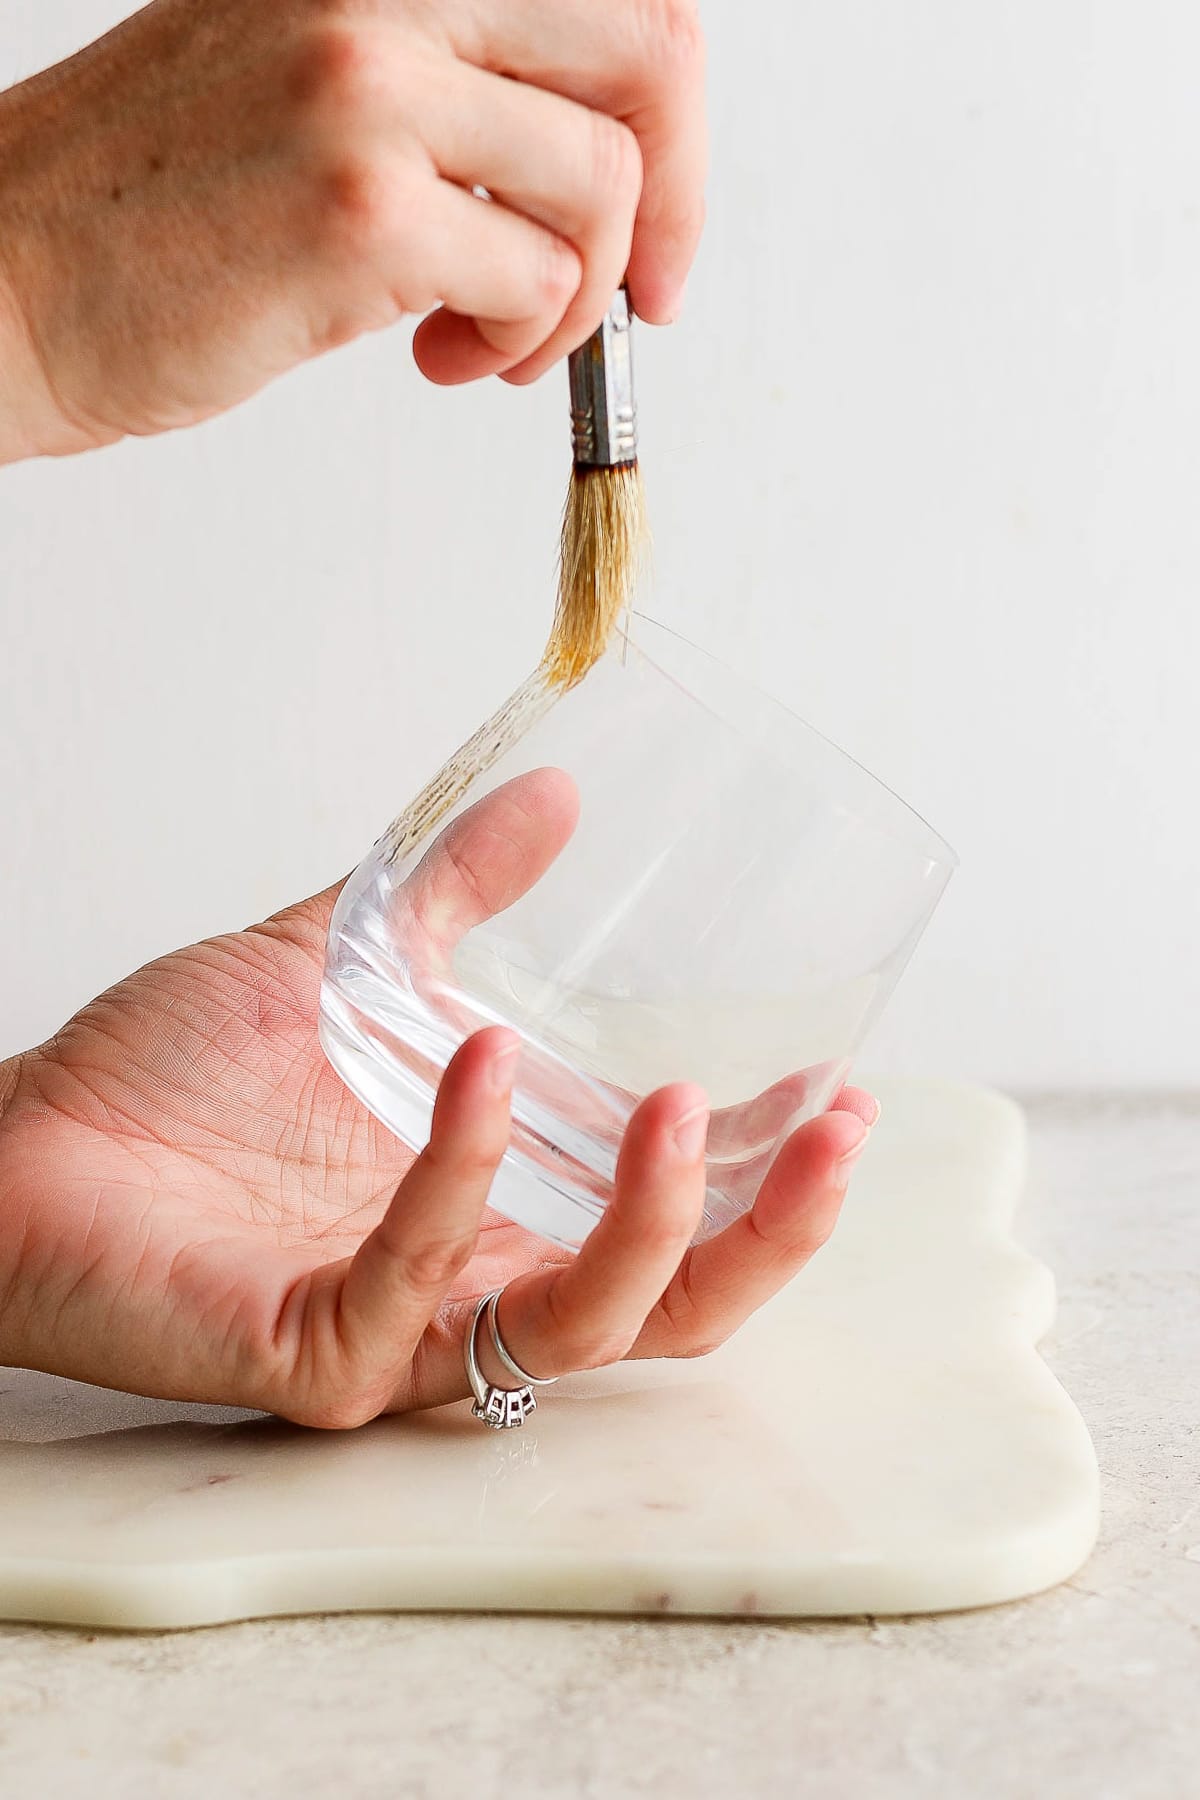 Rimming a margarita glass with tajin